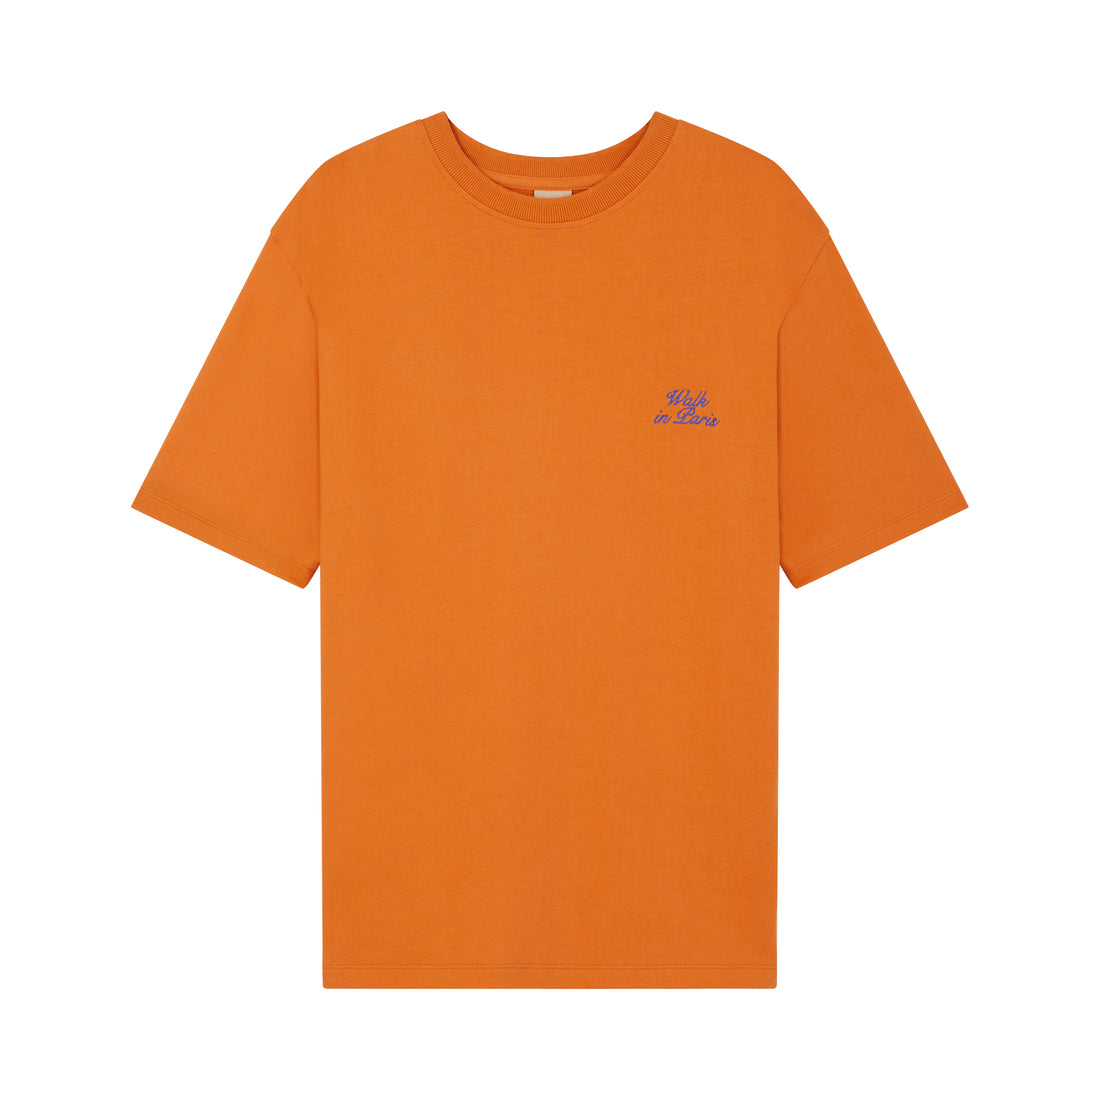 Le t-shirt mandarine brodé